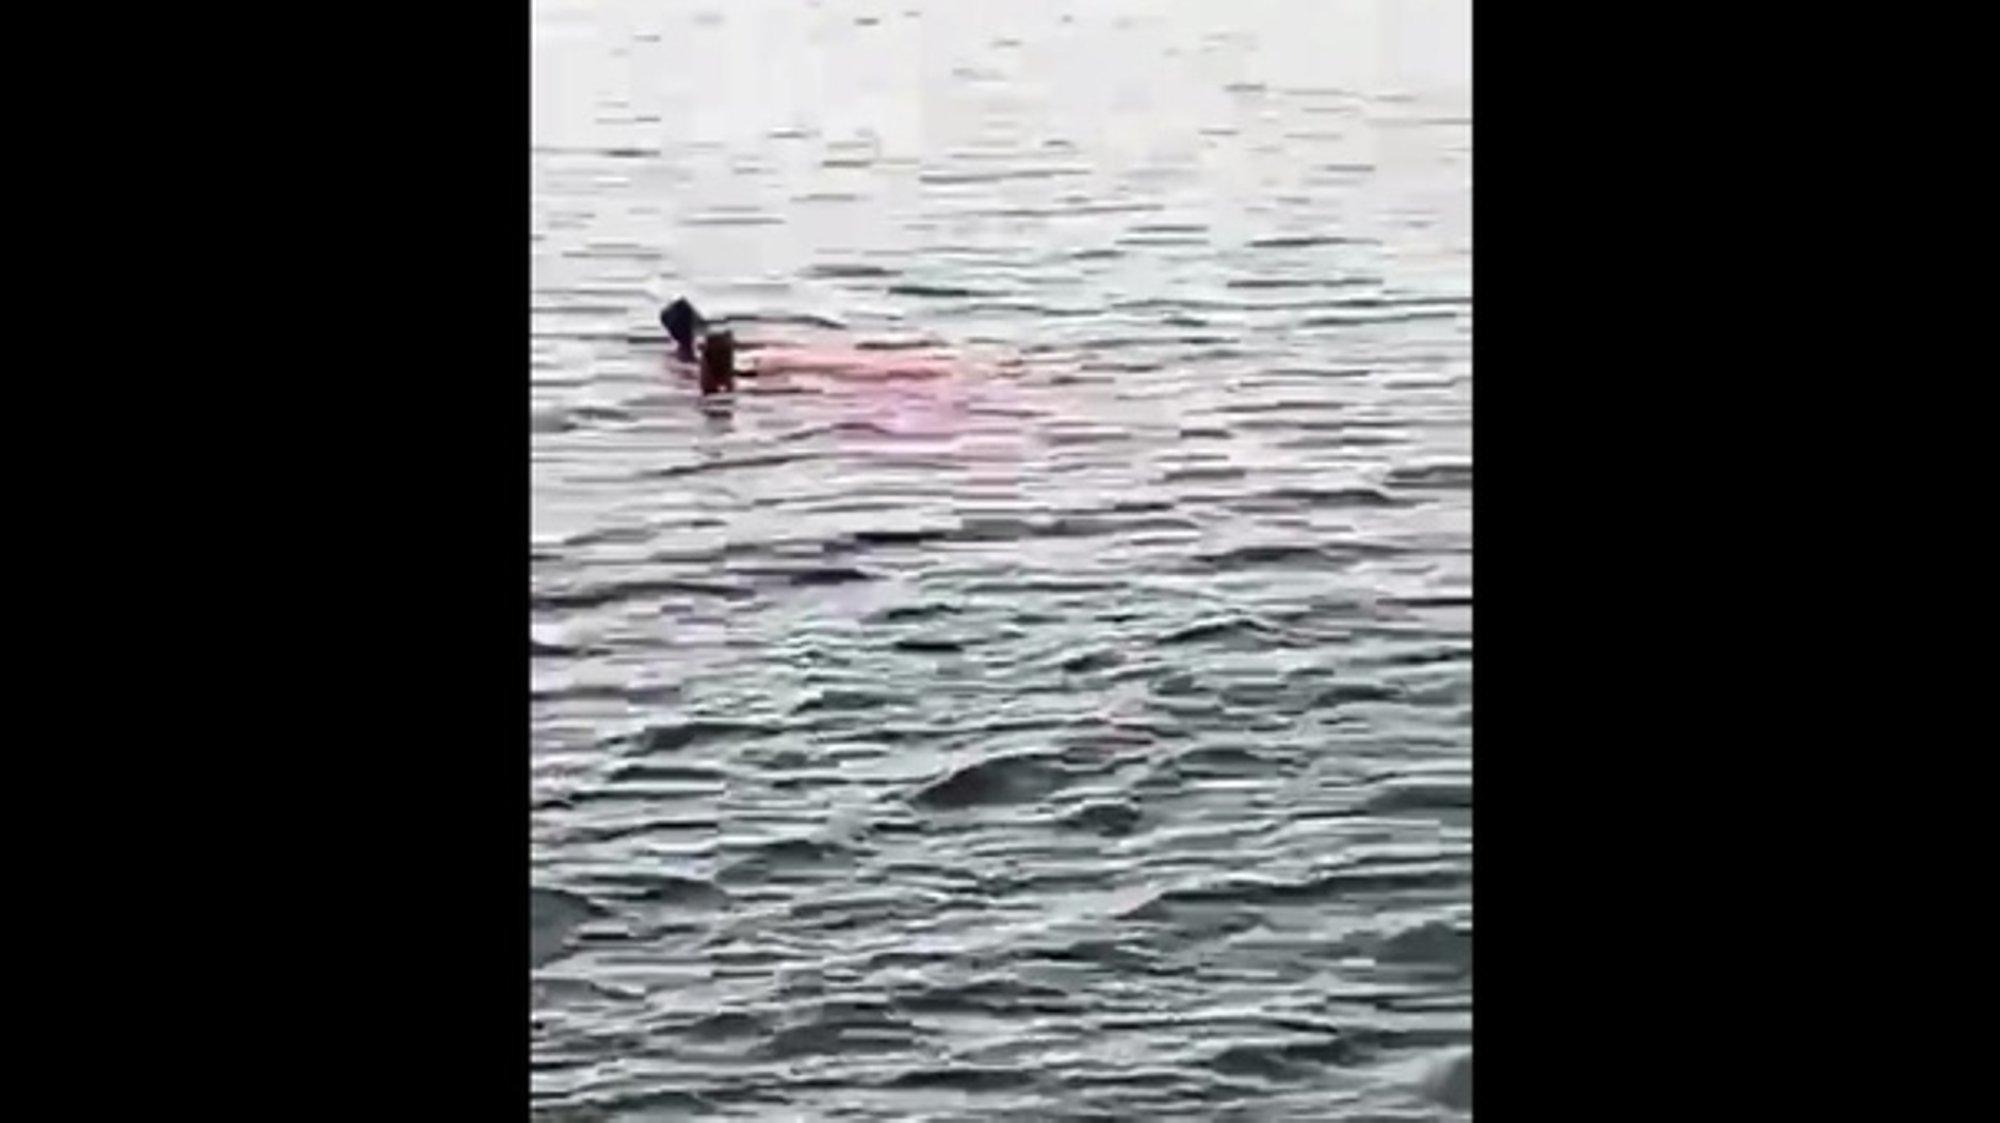 Туристка из башкирии умерла в египте. Акула напала на женщину в Египте 2022. Акула напала на туристку в Египте 1 июля. Нападение акулы в Египте 2.07.2022. В Египте акула напала на туристку 2022.